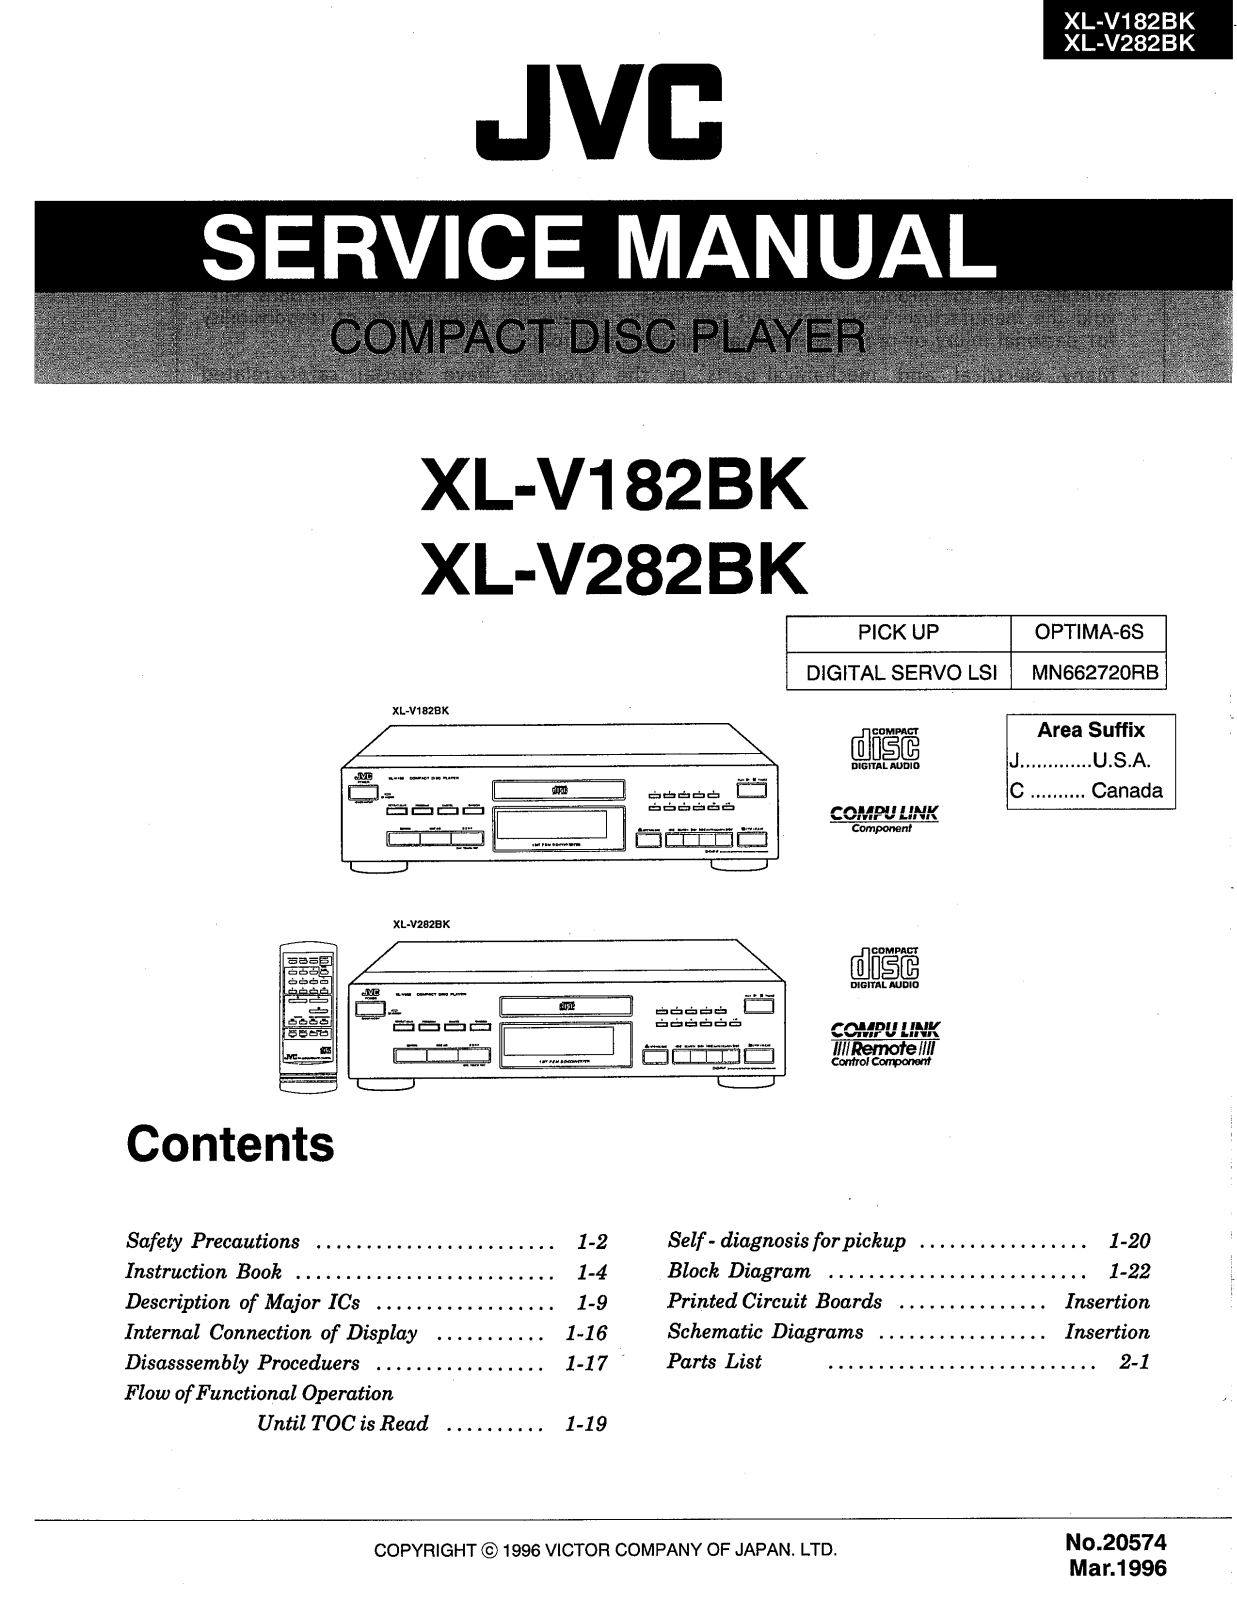 Jvc XL-V282-BK, XL-V182-BK Service Manual